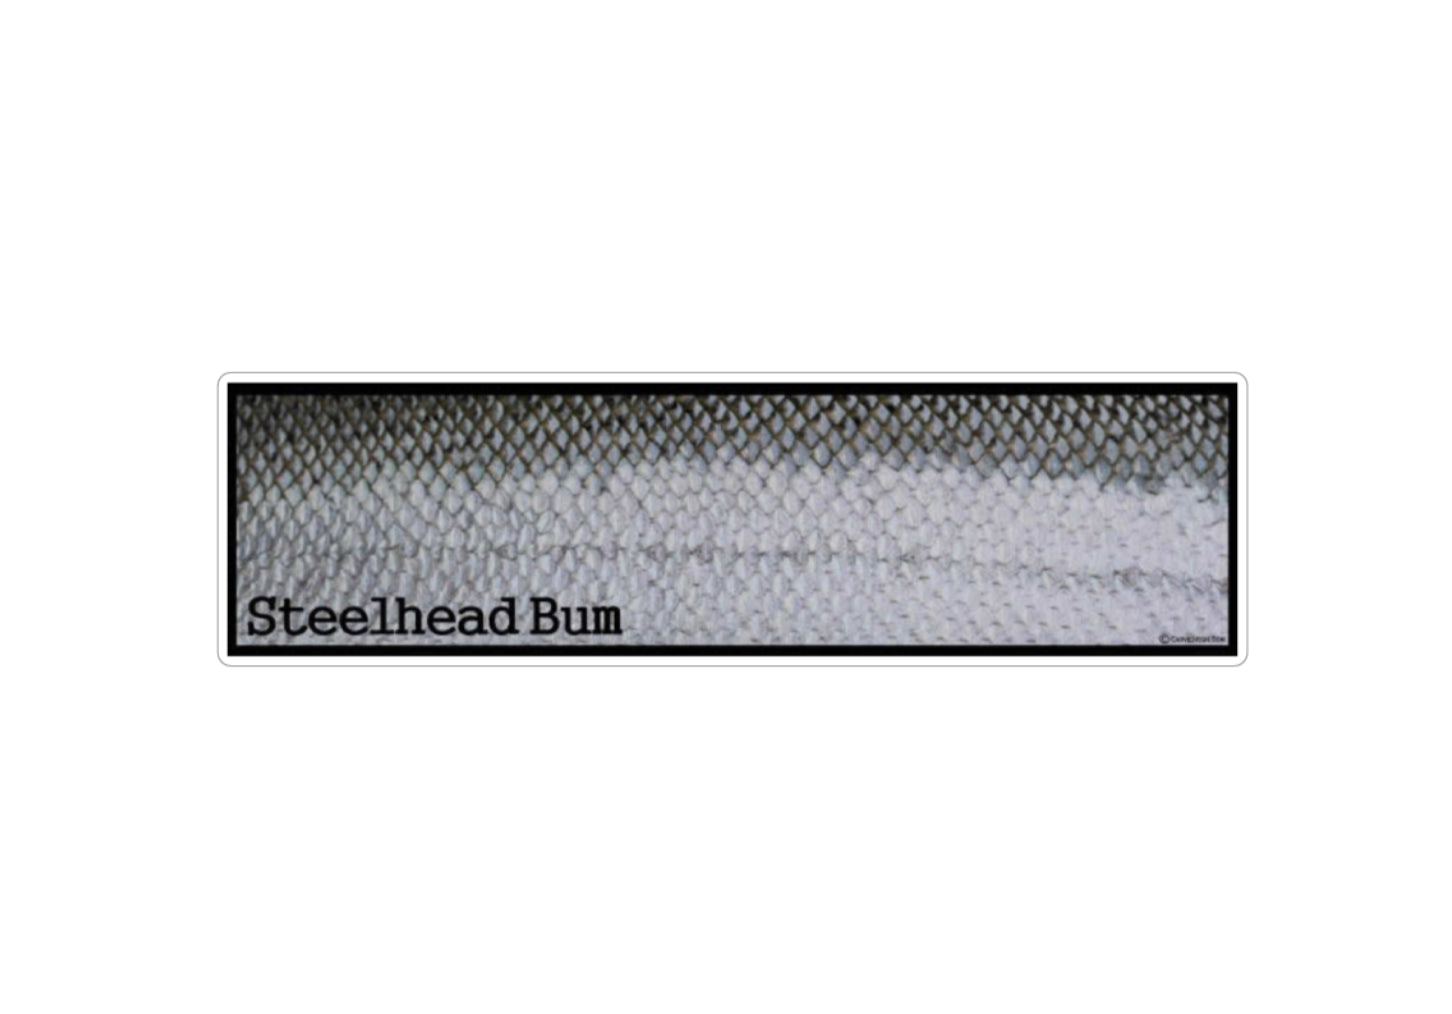 Steelhead Bum Sticker